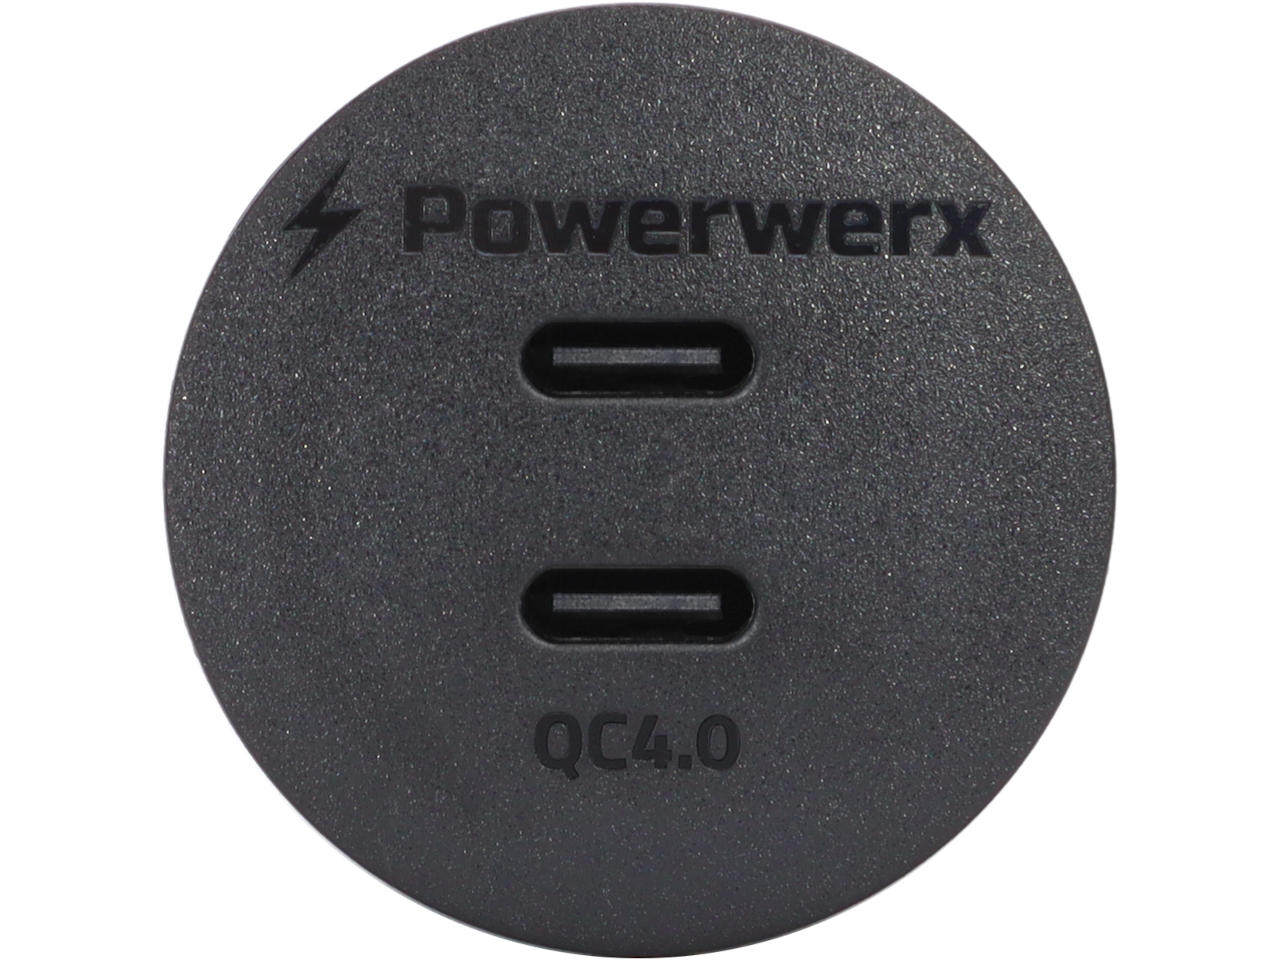 Powerwerx PanelUSB-DualQC4